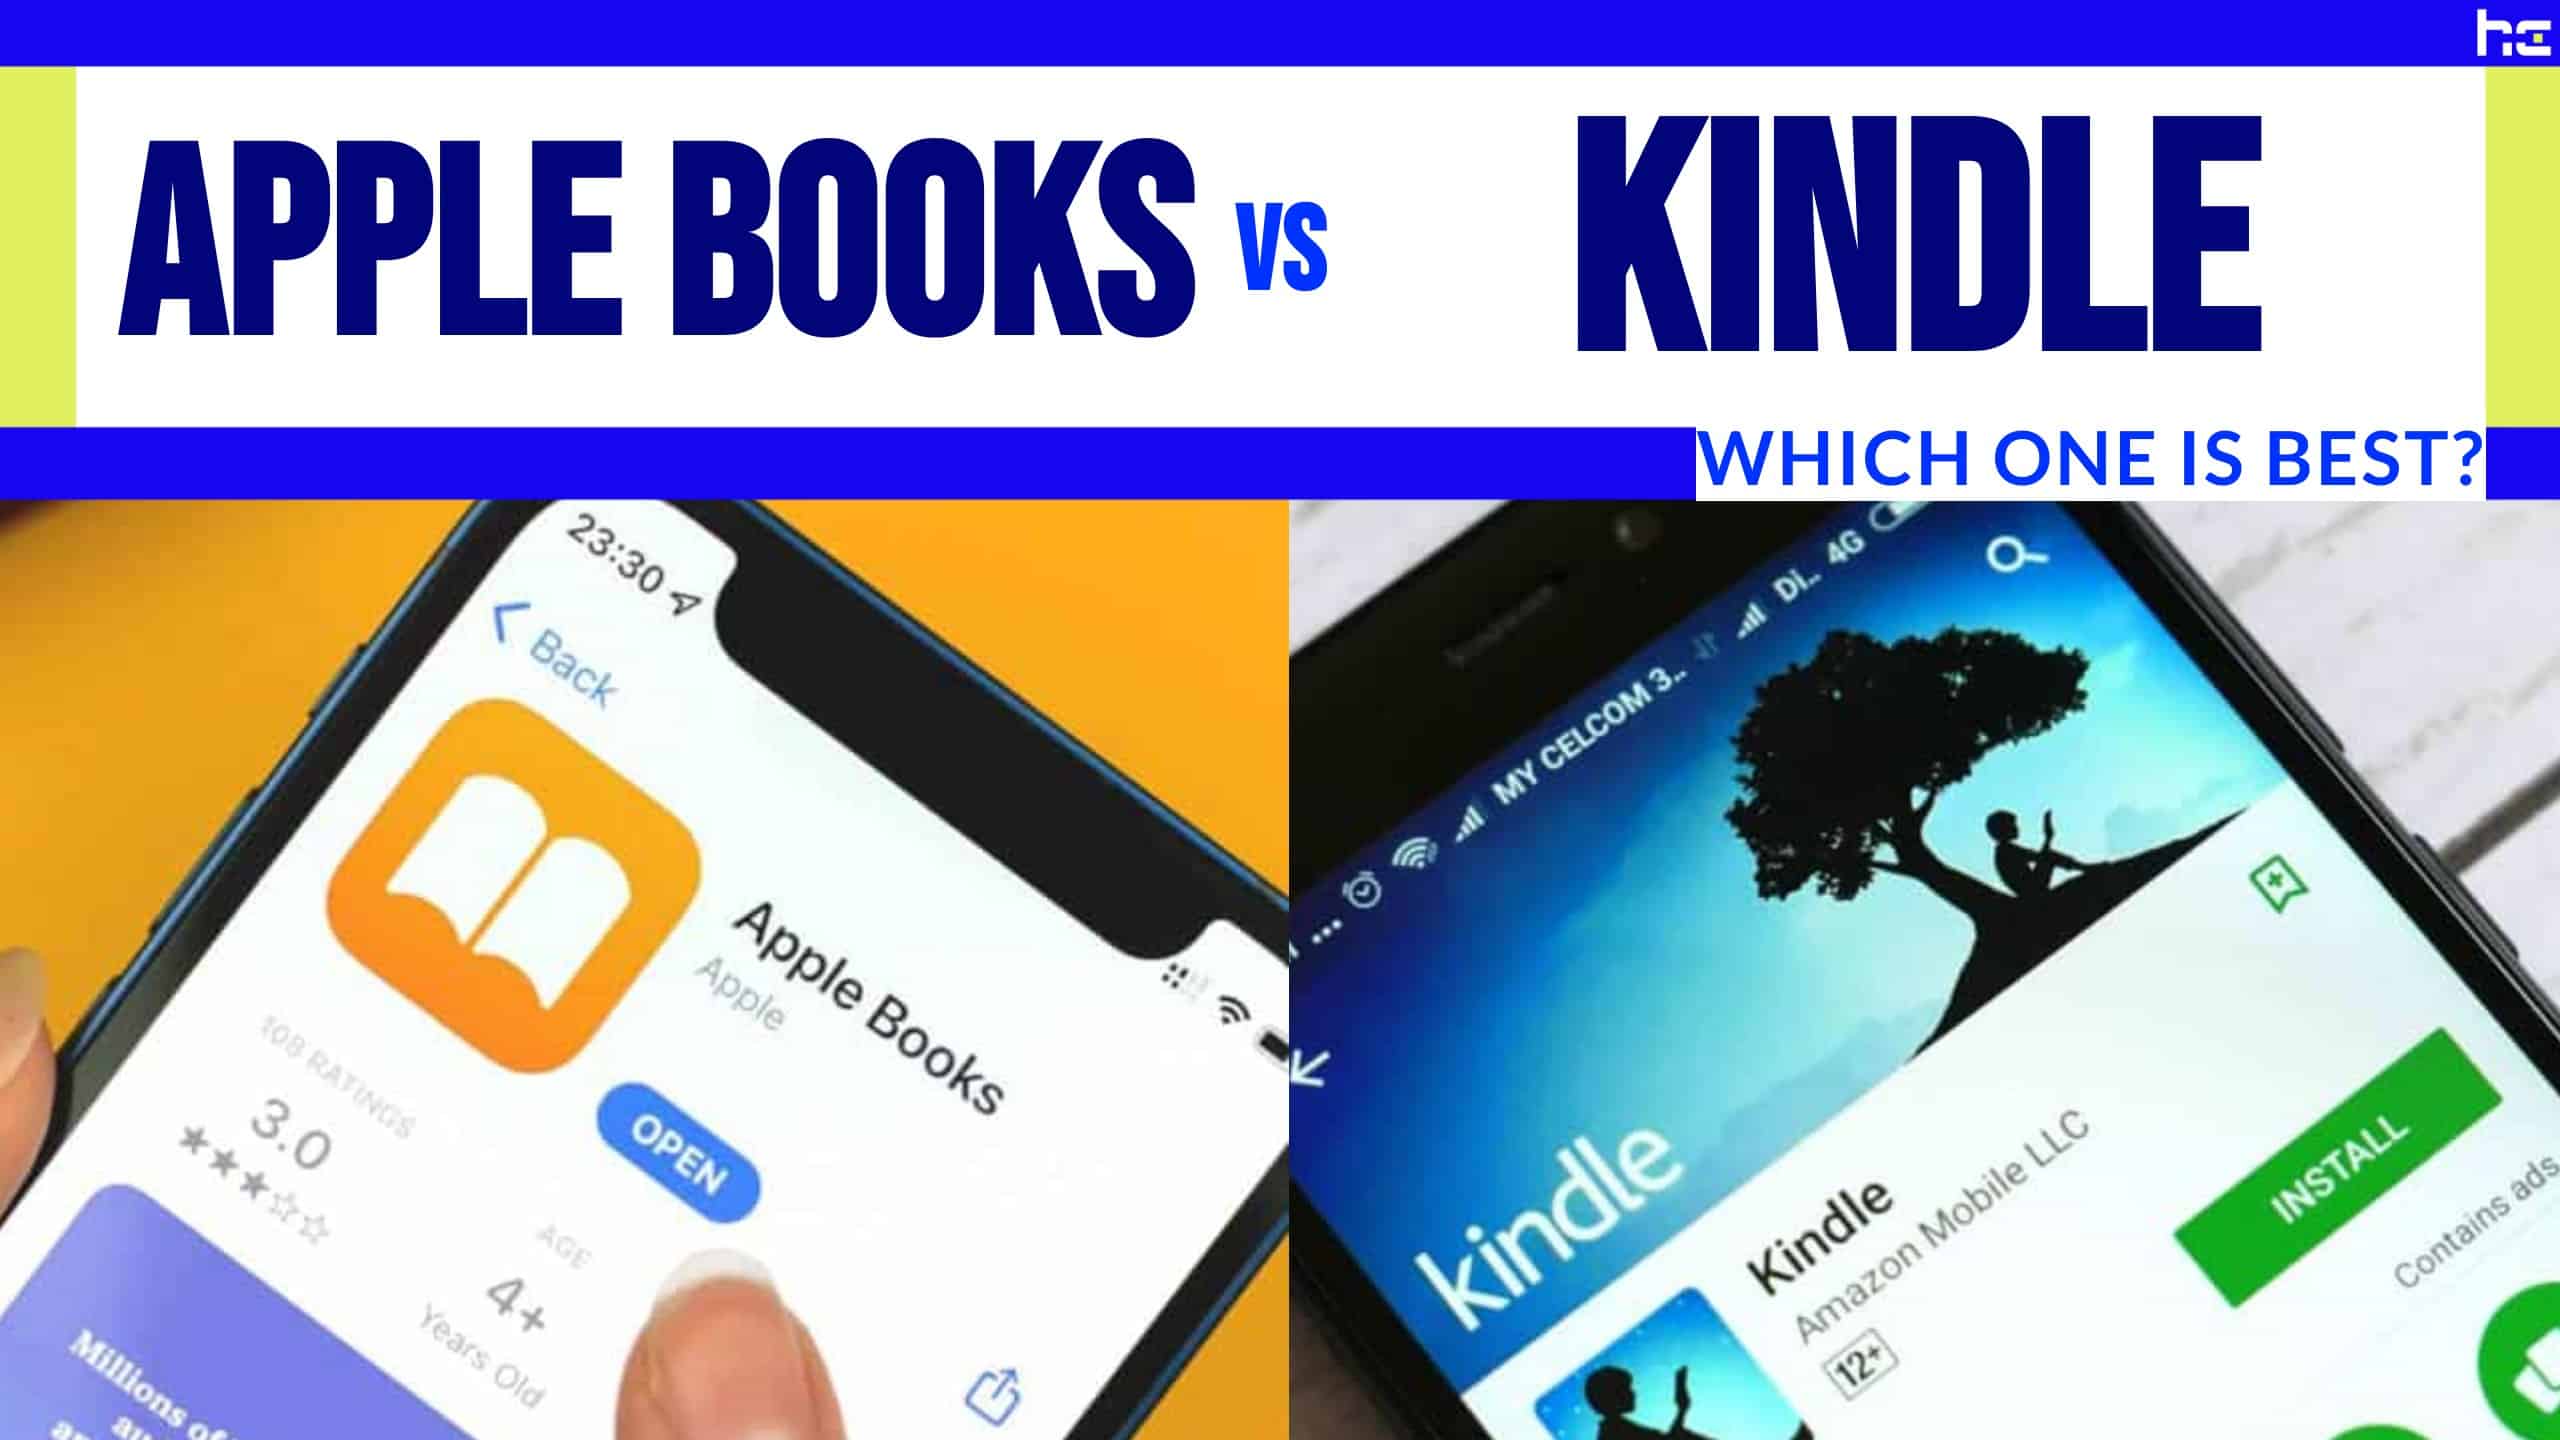 Apple Books vs Kindle featured image